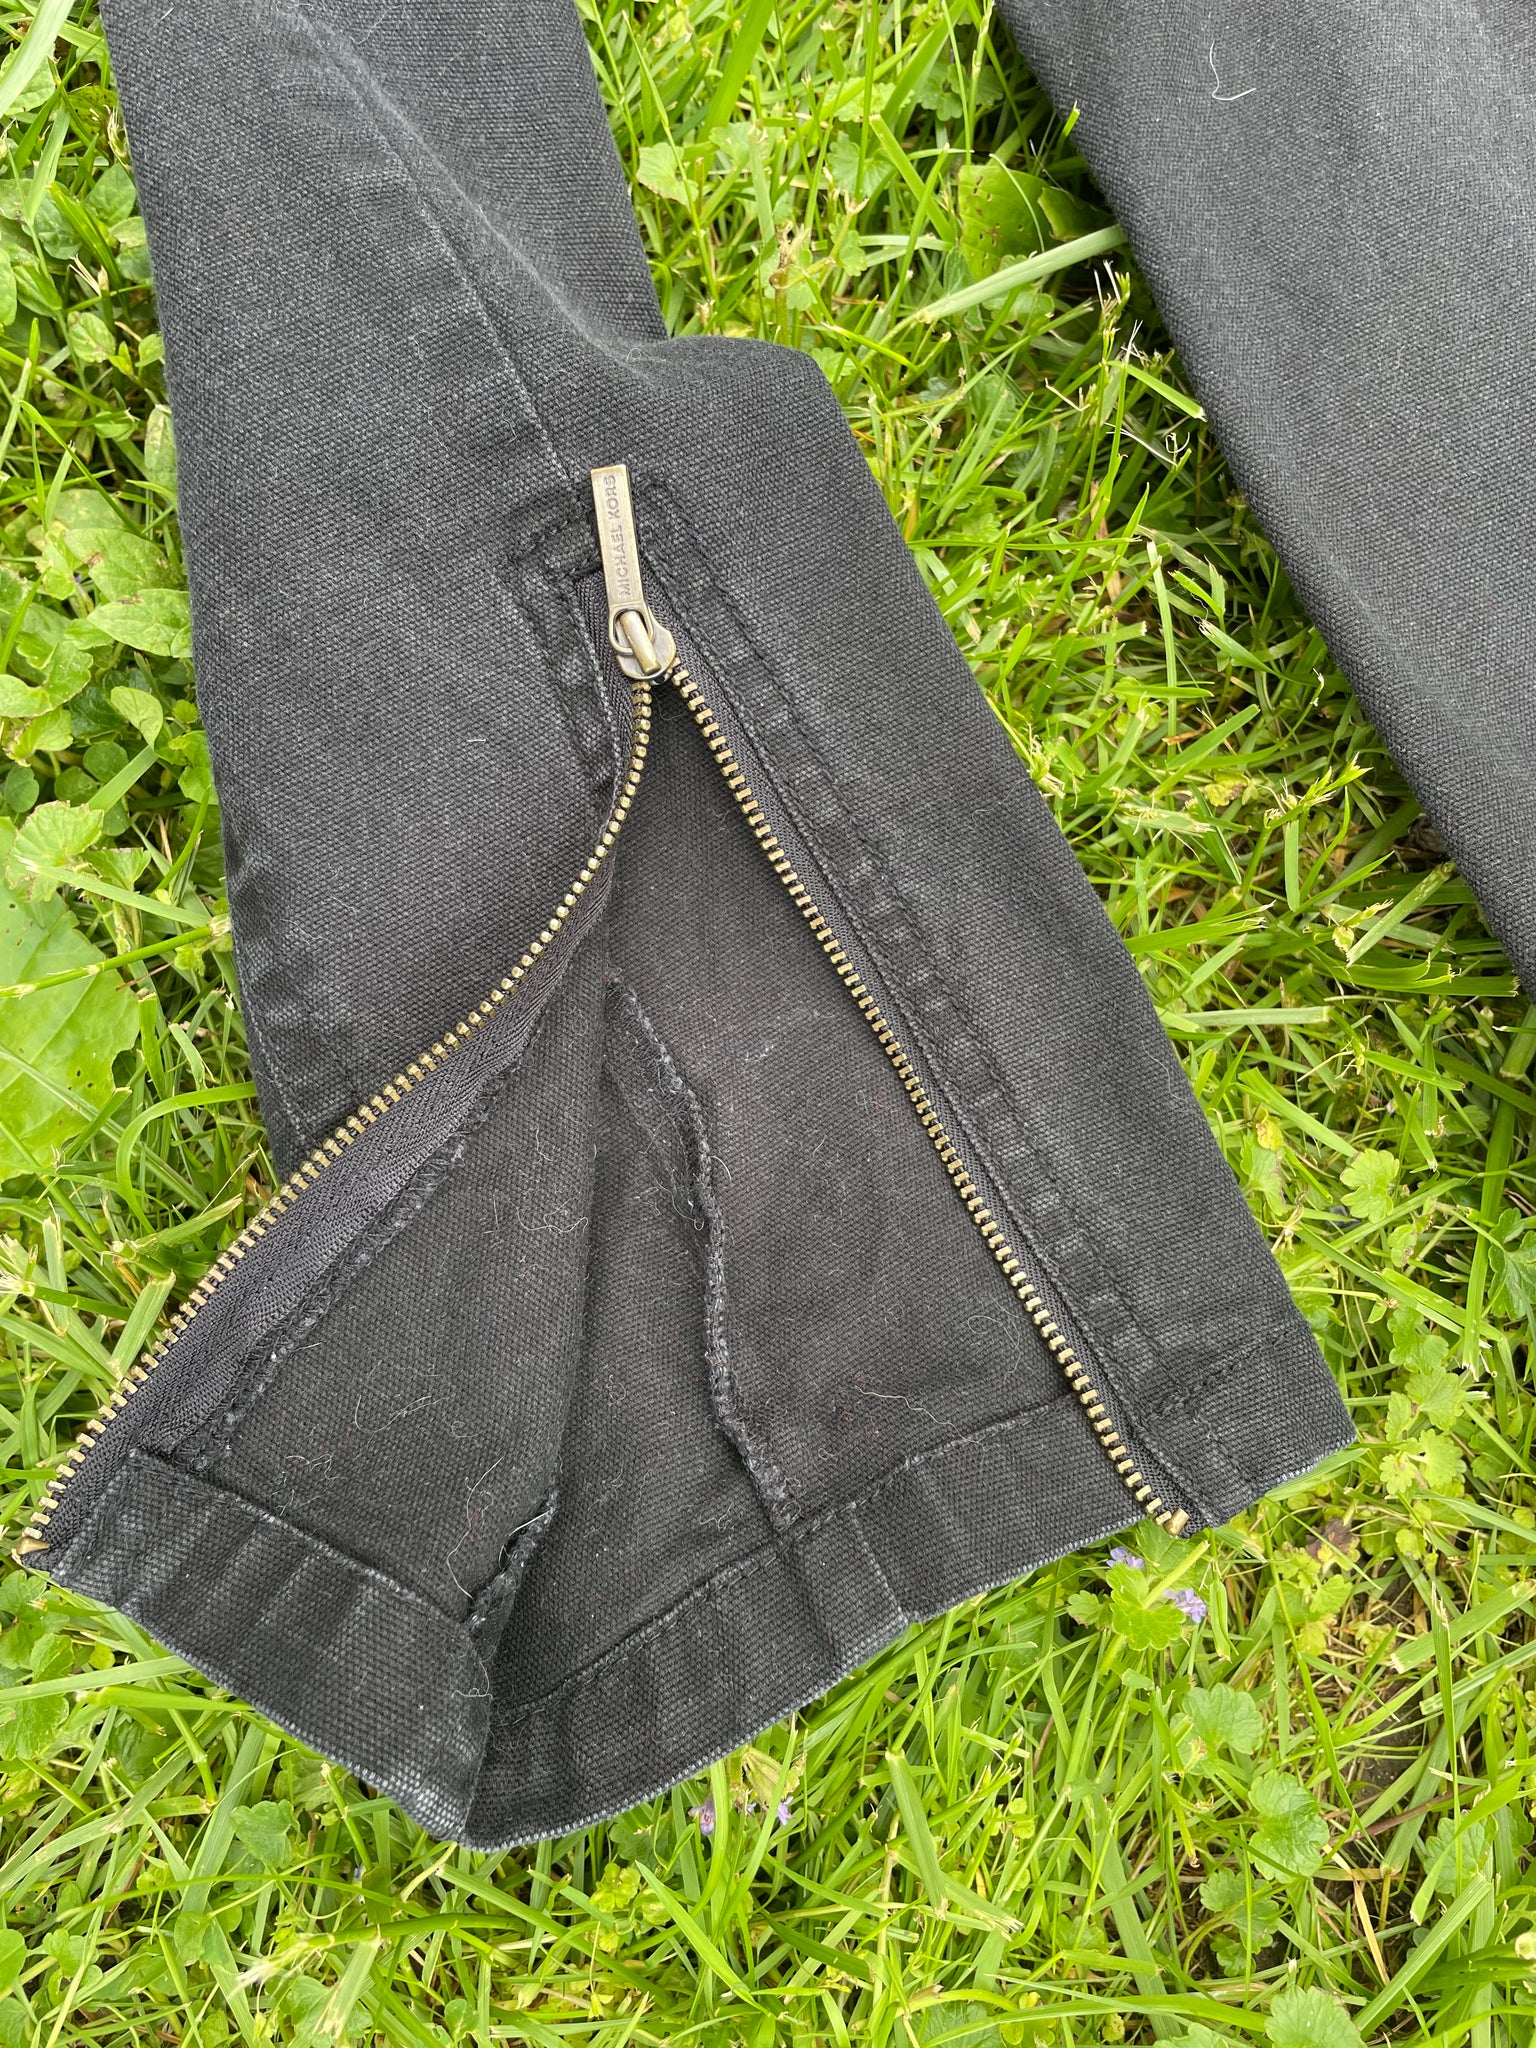 Michael Kors skinny jeans, Size 2